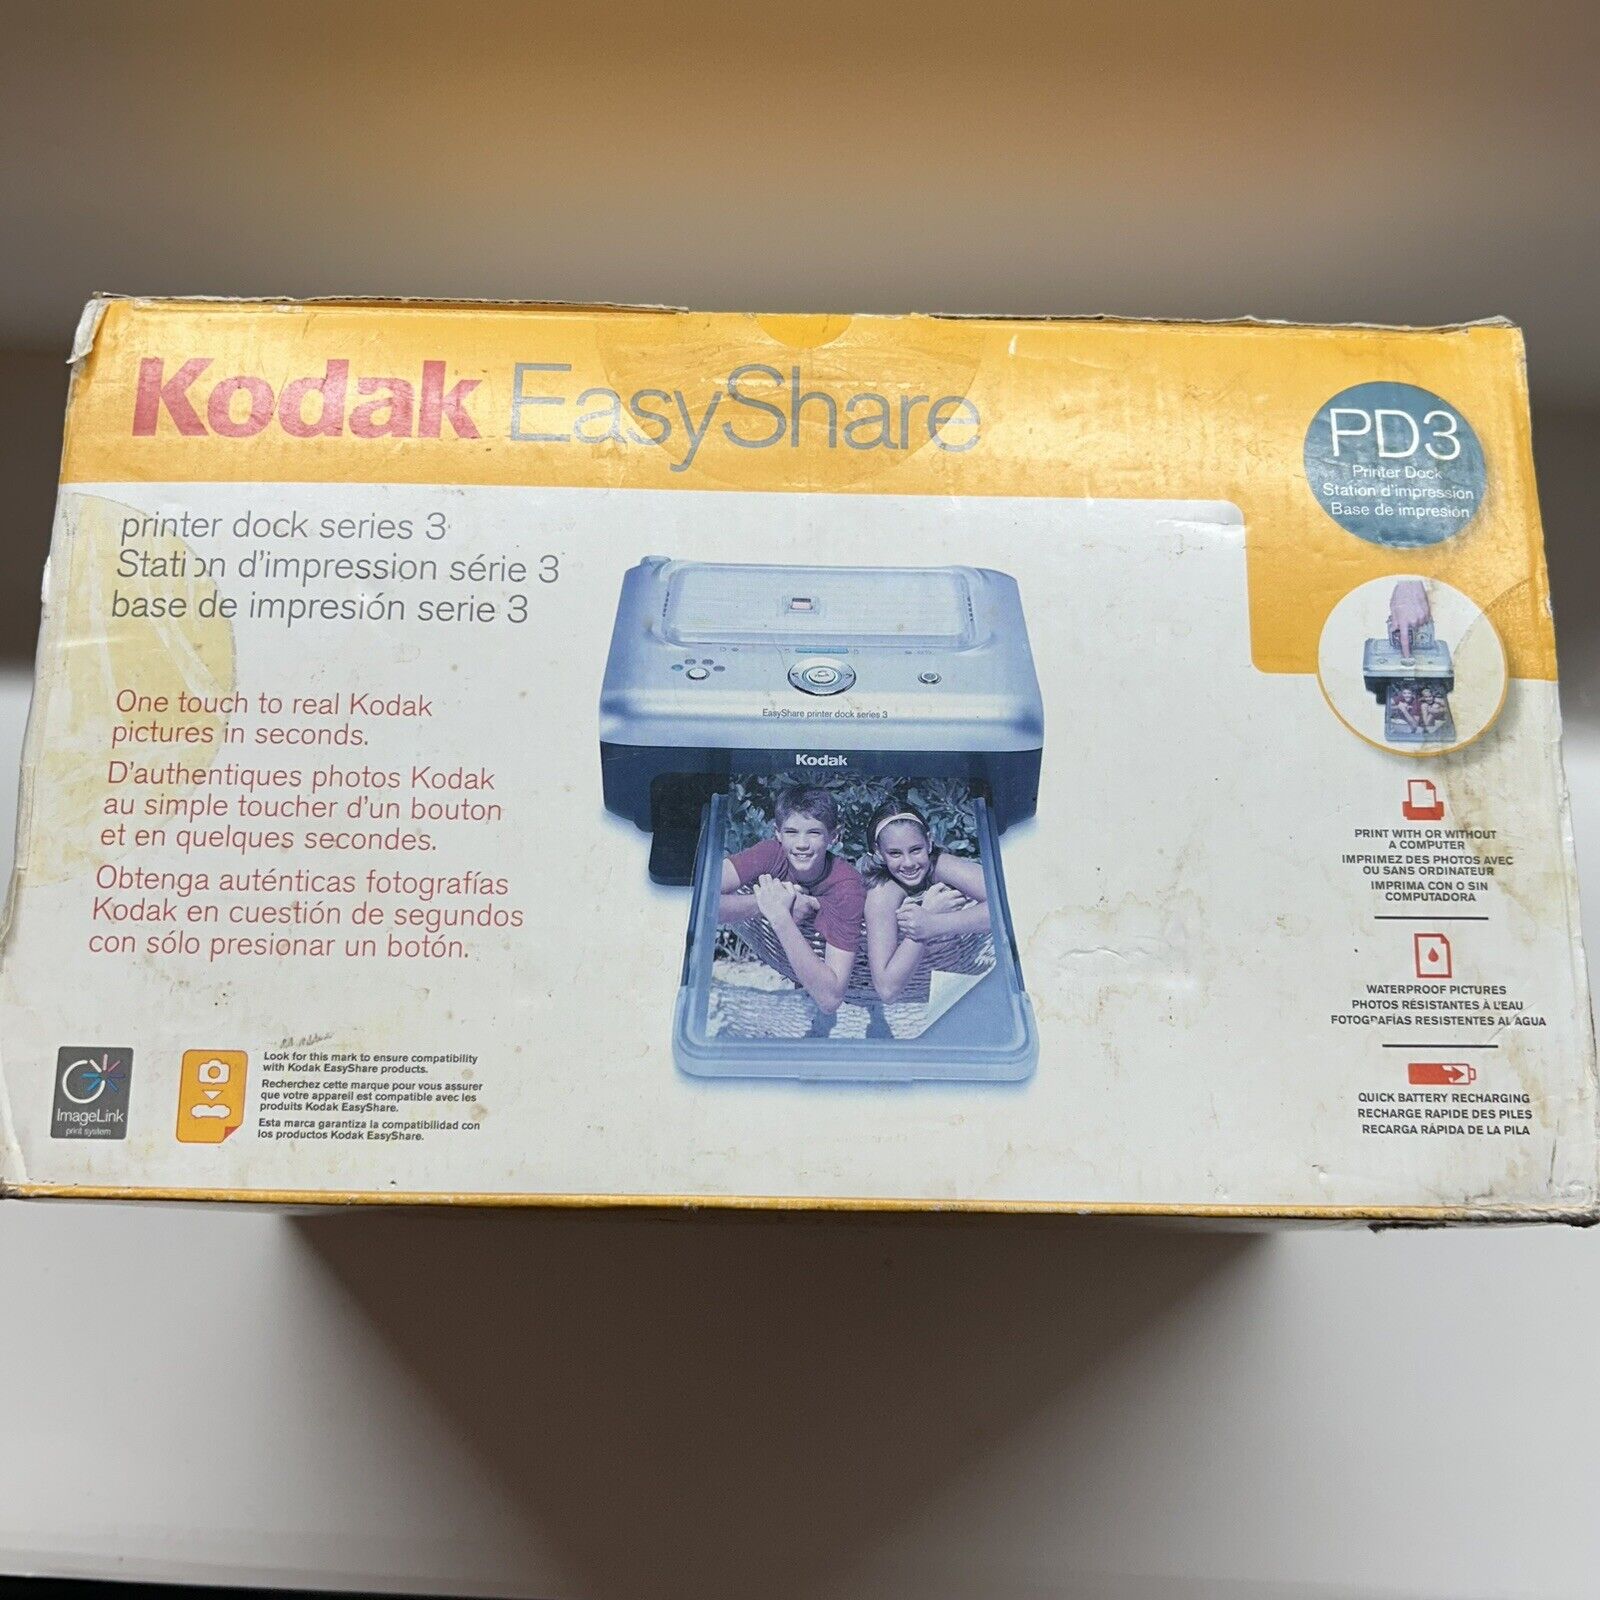 Kodak EasyShare Digital Photo Thermal Printer Dock Station plus 250+ Photo Paper